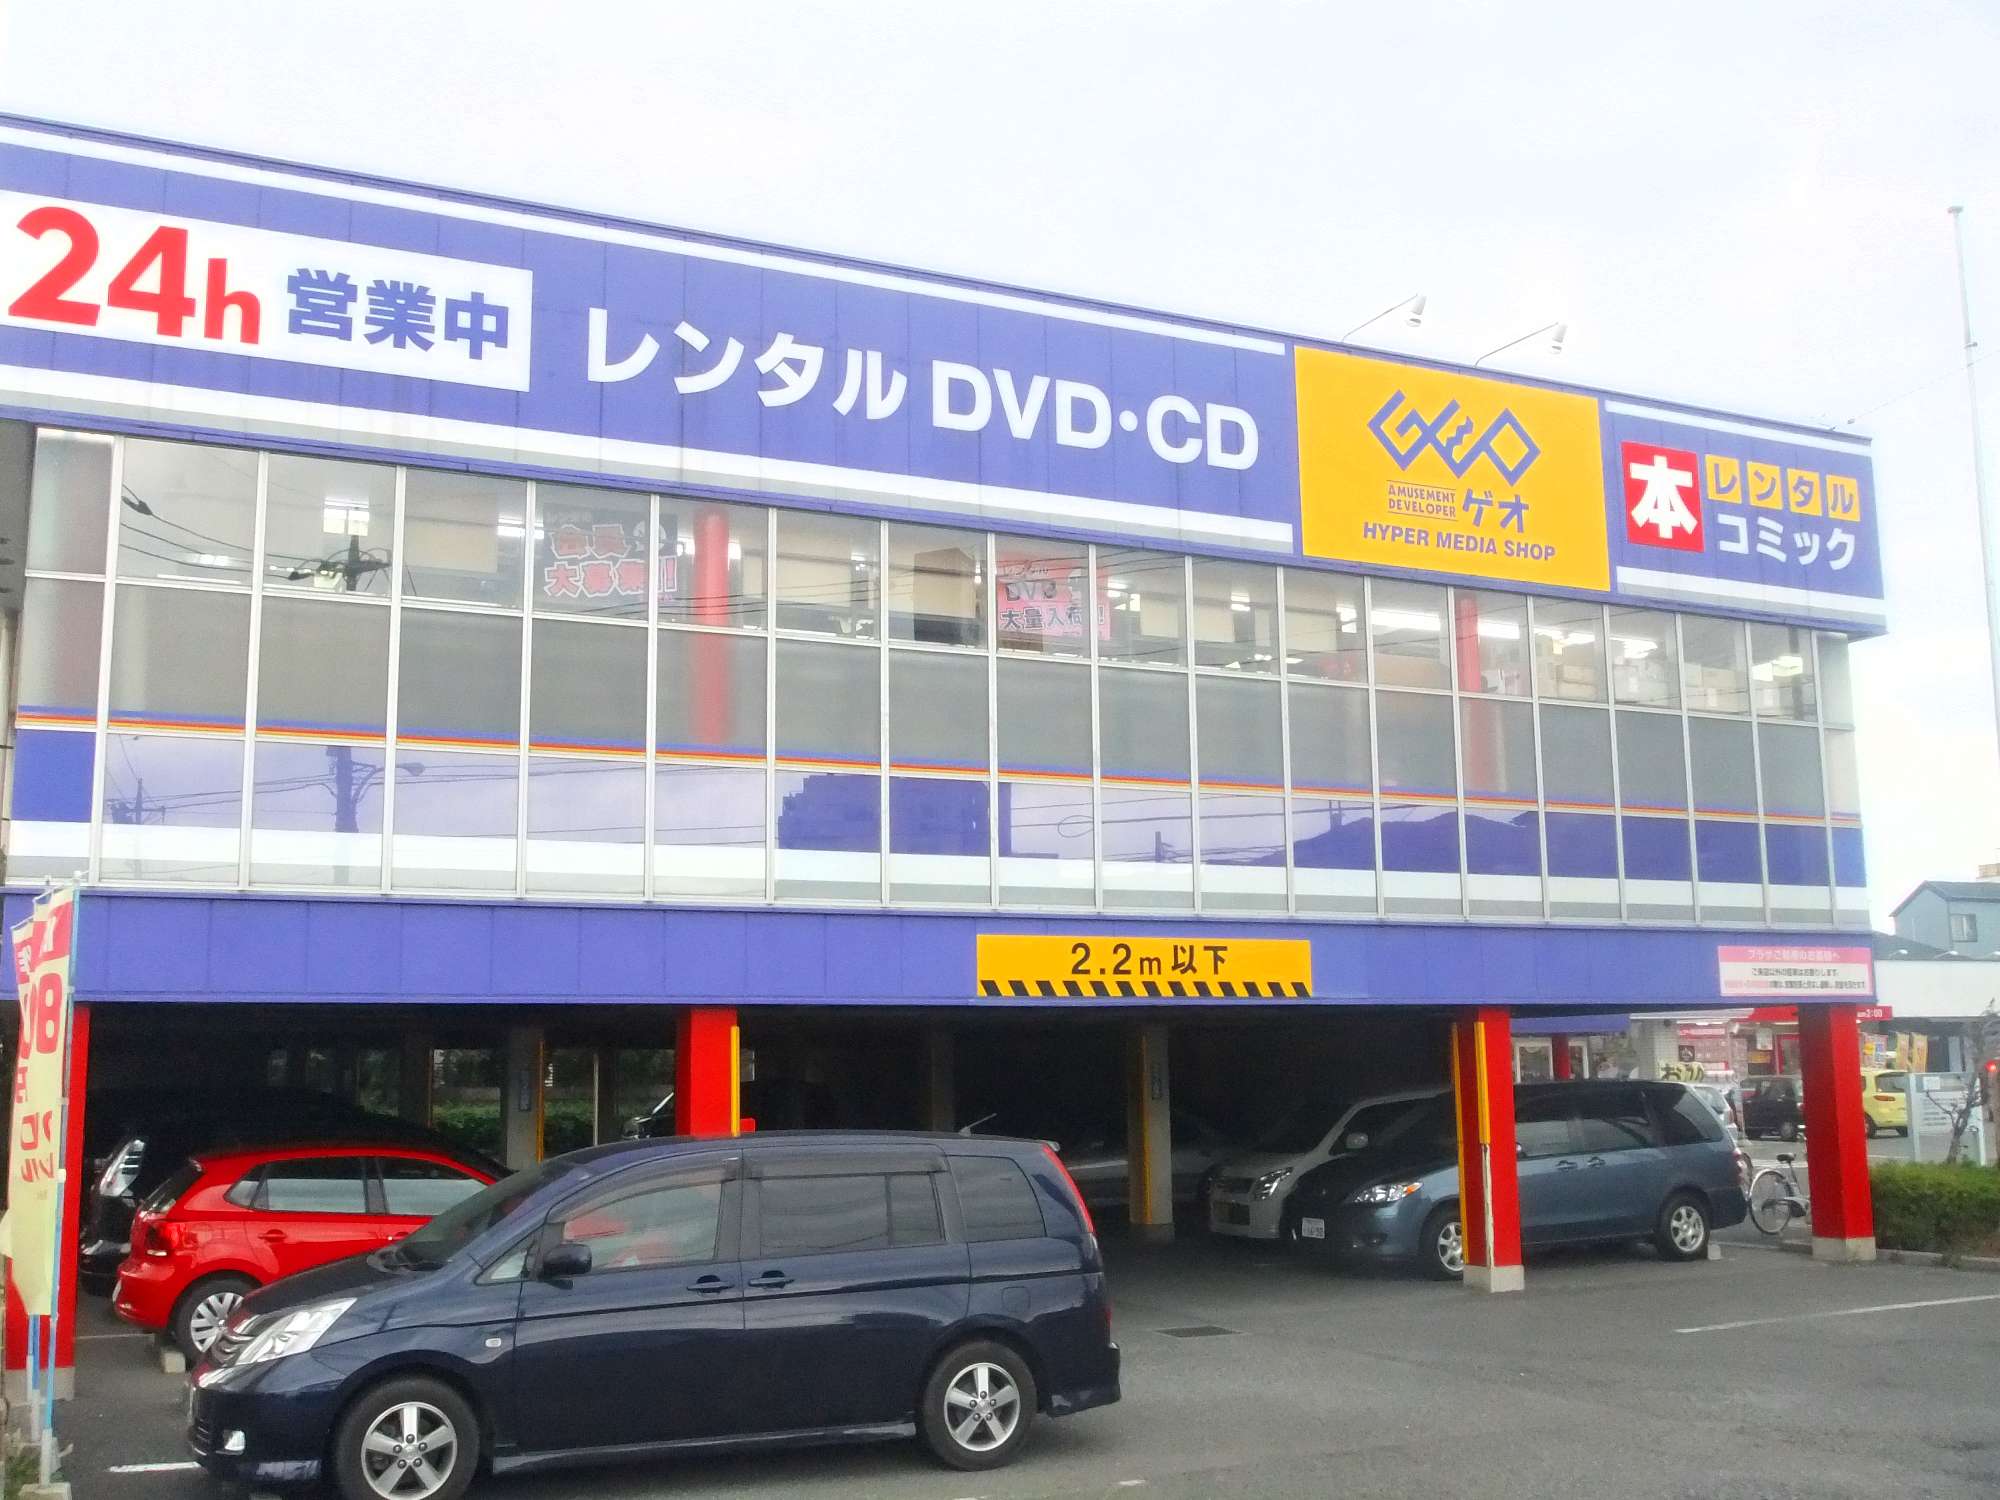 Rental video. GEO new Tokorozawa shop 1193m up (video rental)